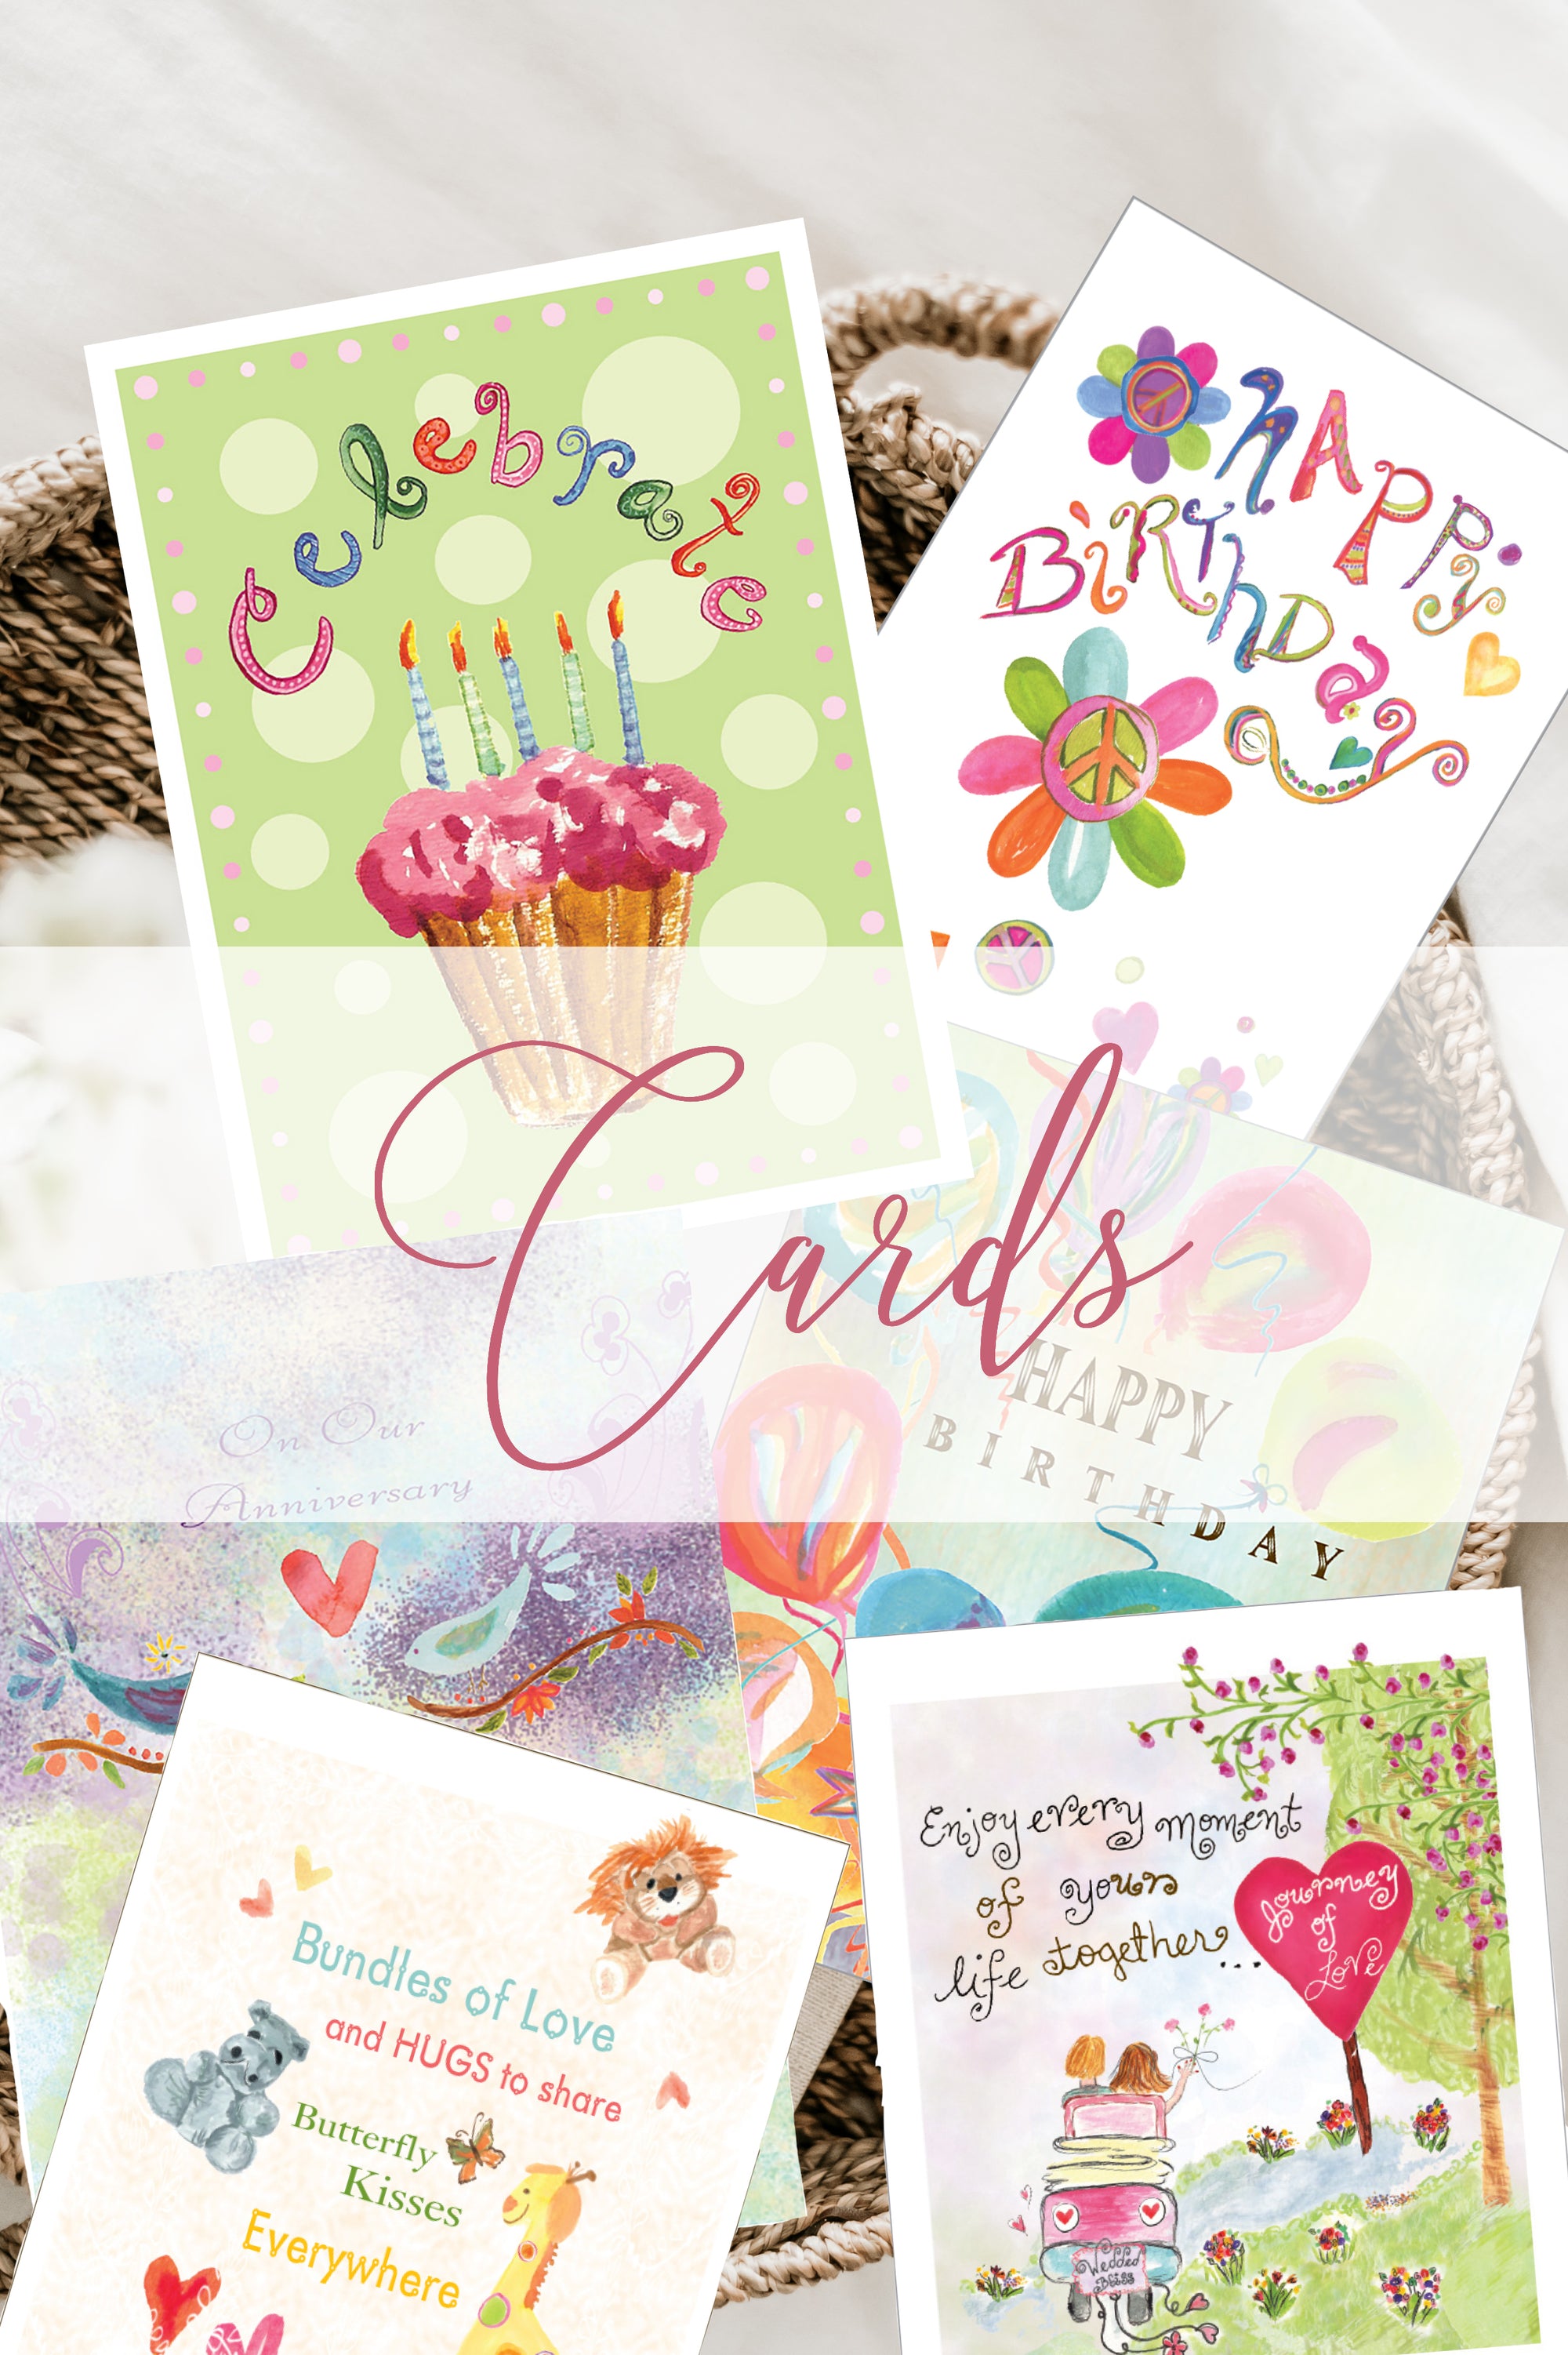 Renee’s Handmade Greeting Cards!